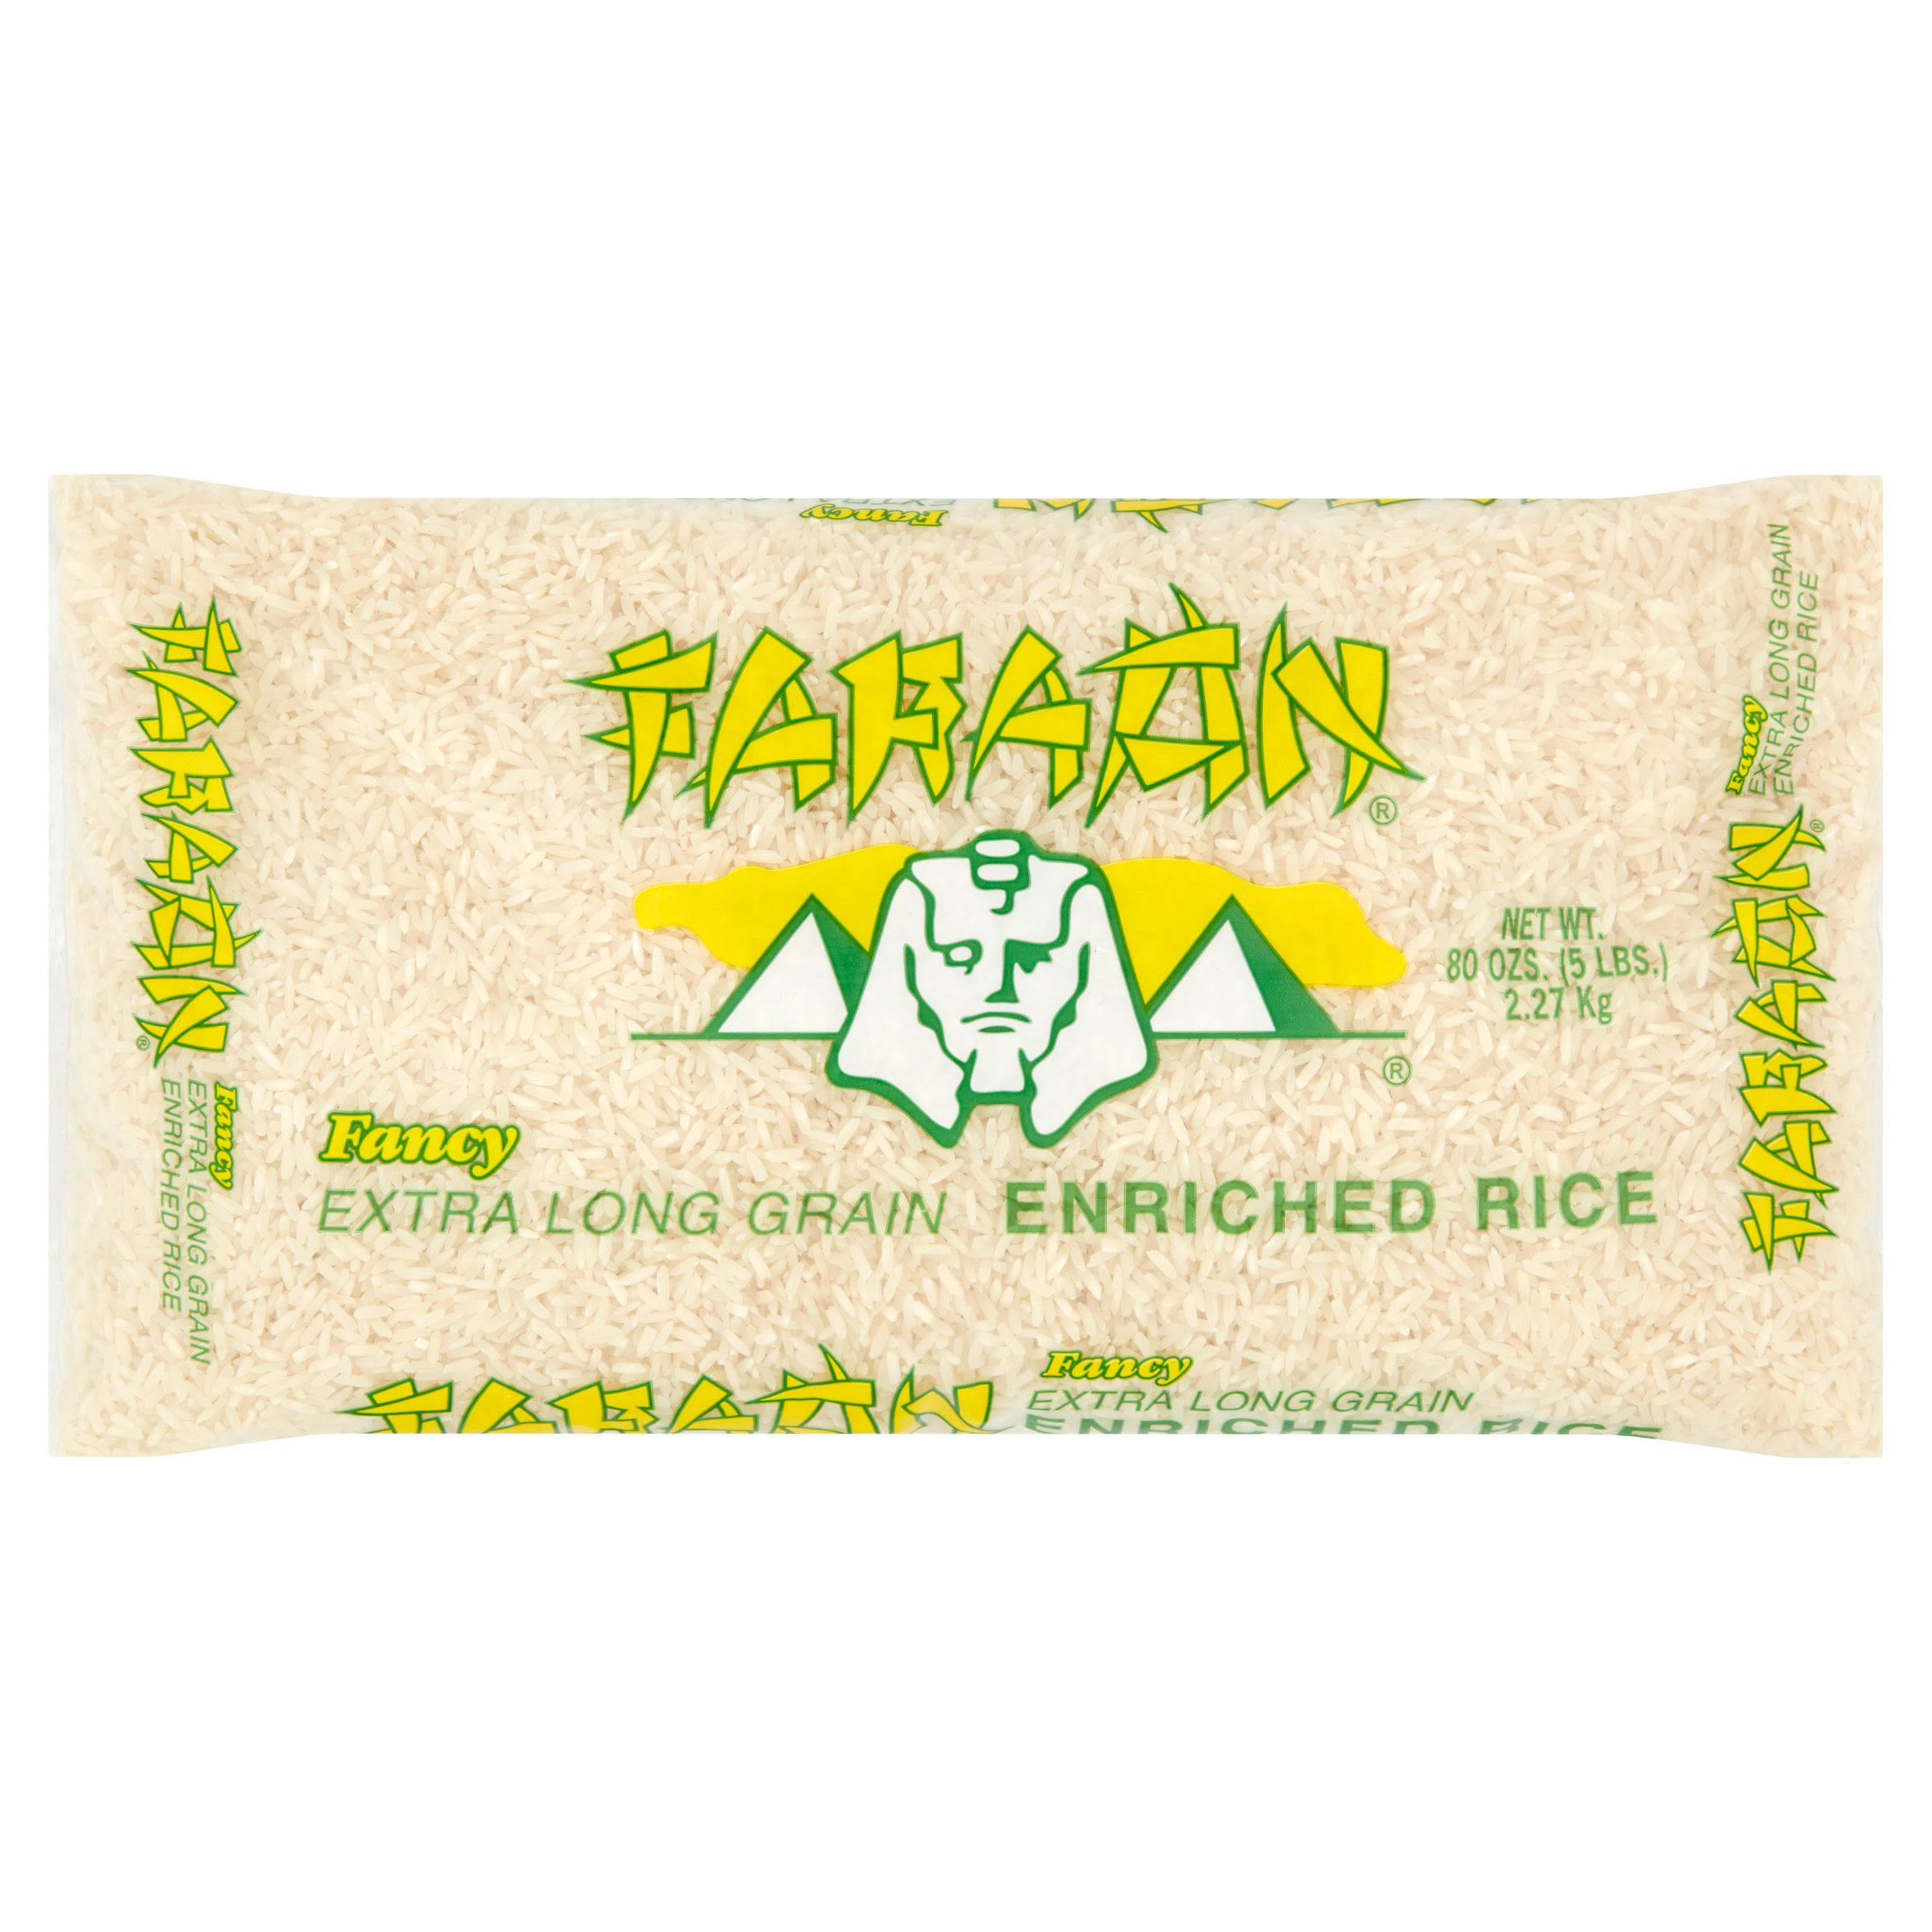 FARAON Fancy Extra Long Grain Enriched Rice - 80 oz